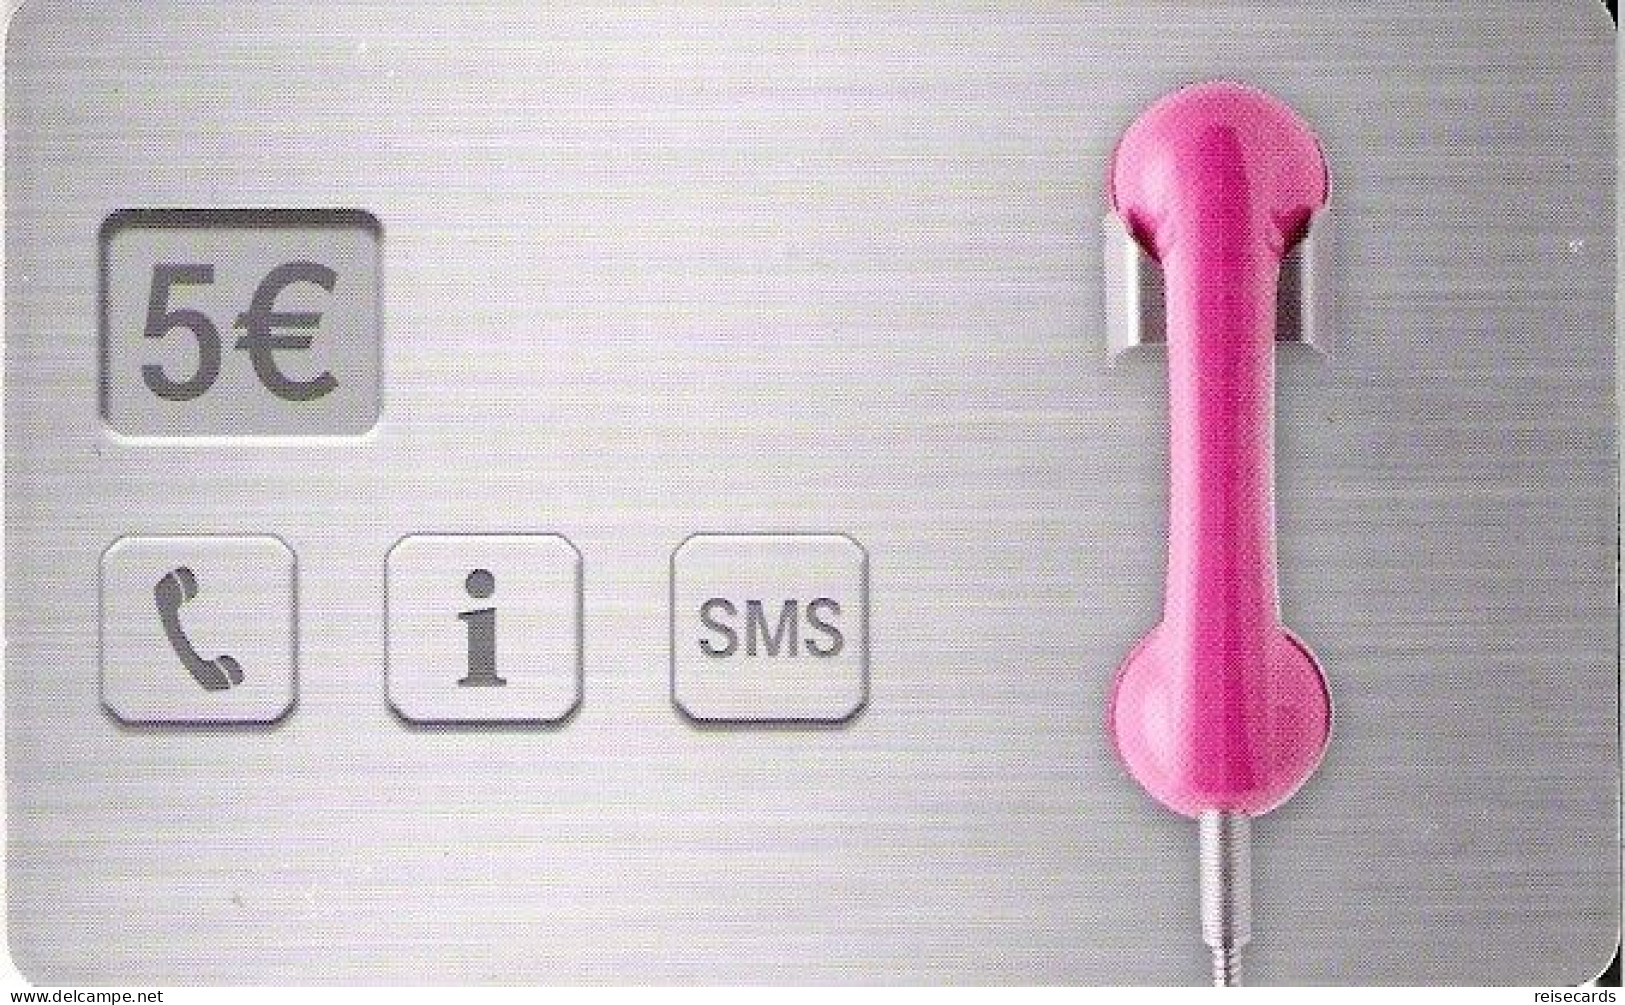 Germany: Telekom PD 01 10.07 Anruf Oder SMS, Bargeldlos - P & PD-Series : Guichet - D. Telekom